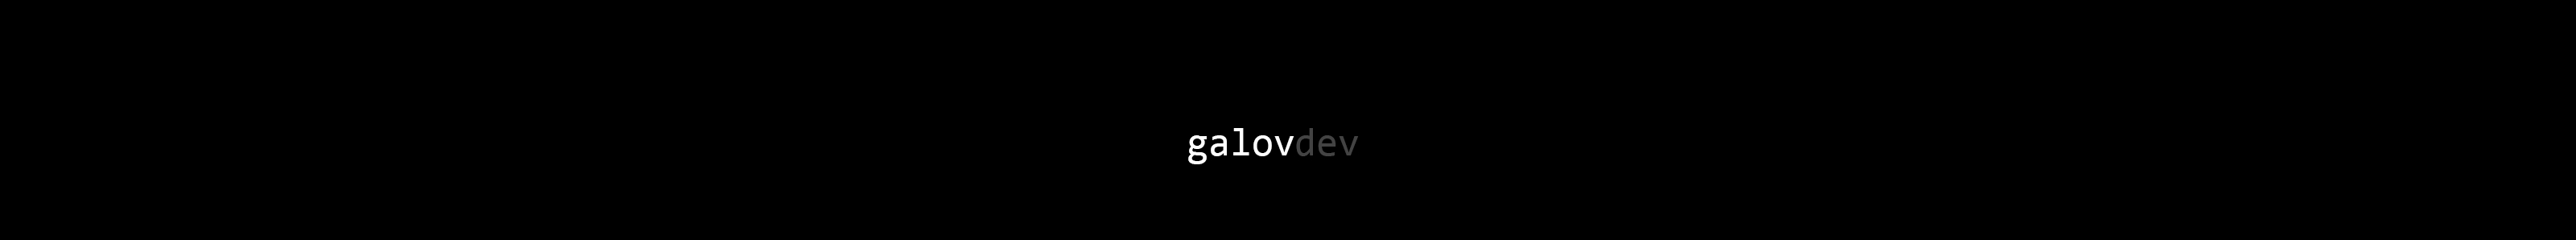 Galo Vega's profile banner